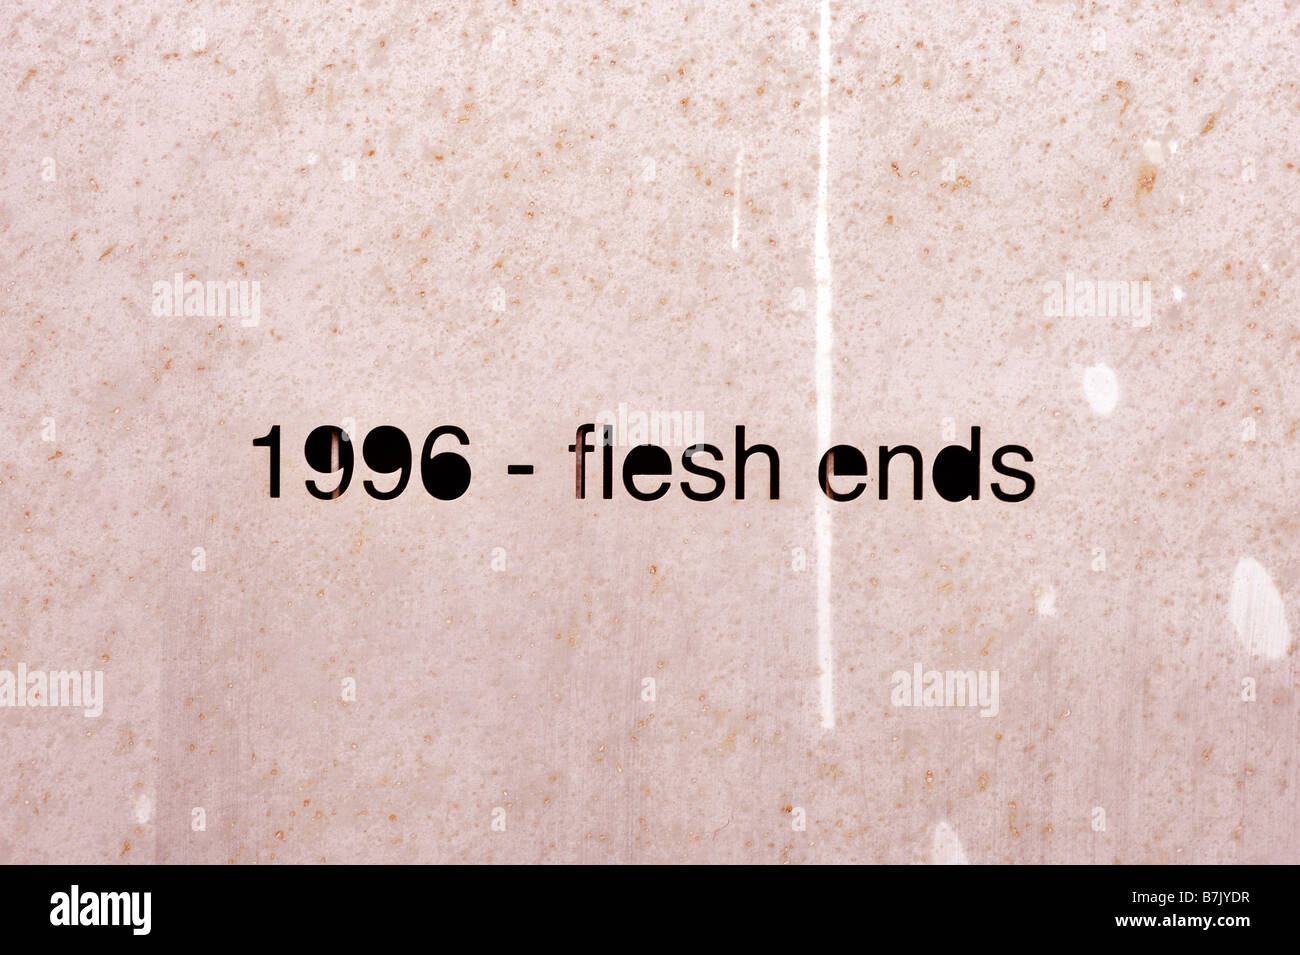 flesh ends metal hacienda memorial plaque factory records nightclub manchester uk england 1996 Stock Photo